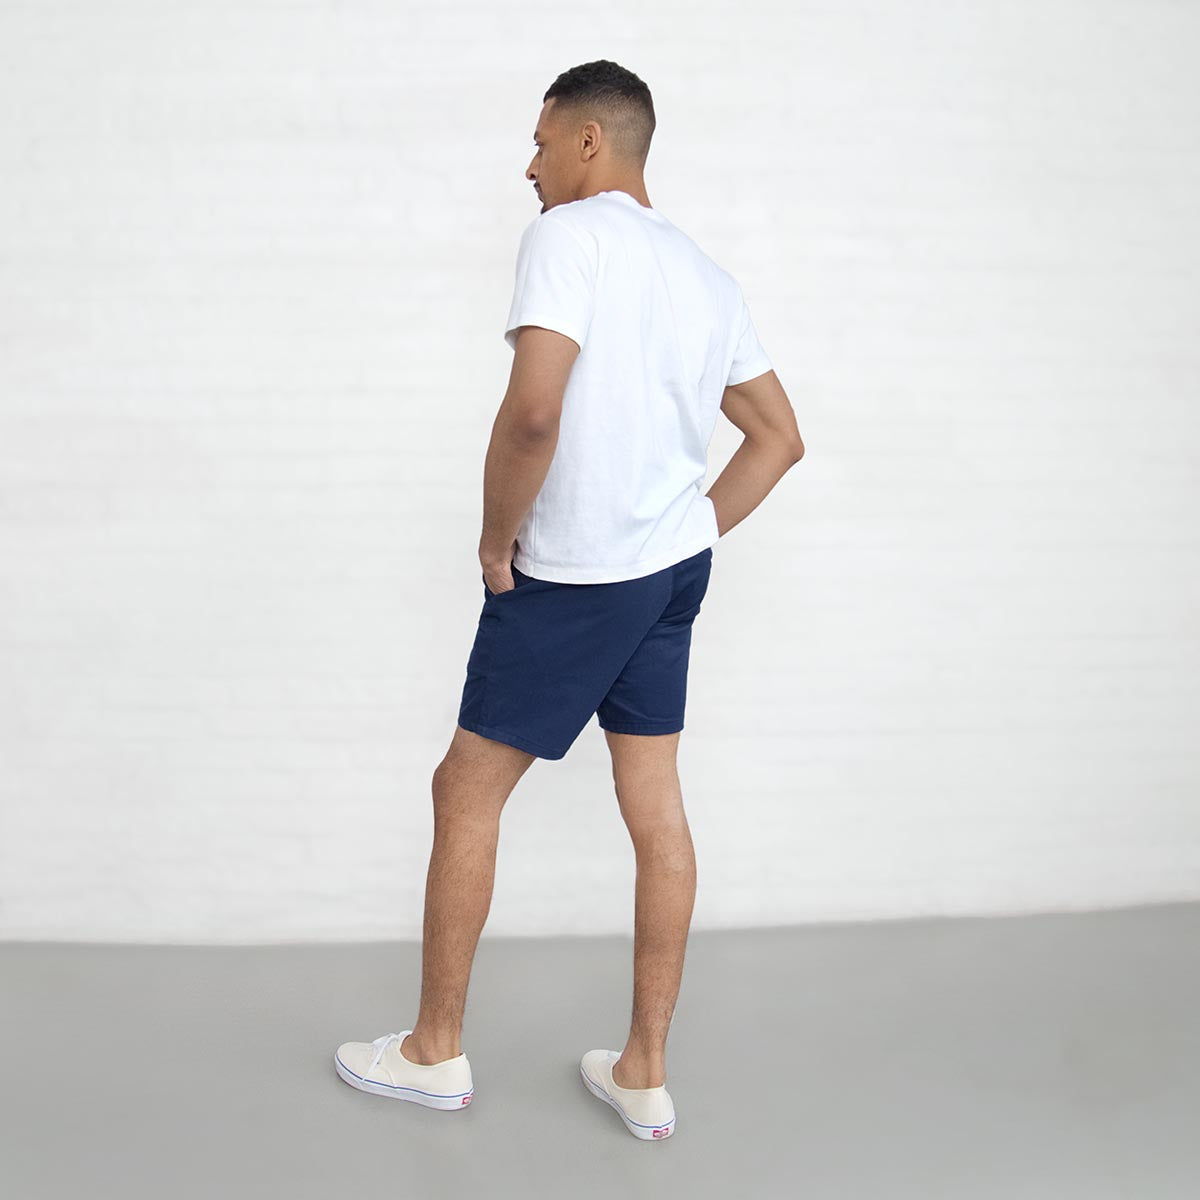 Chino Shorts - Navy